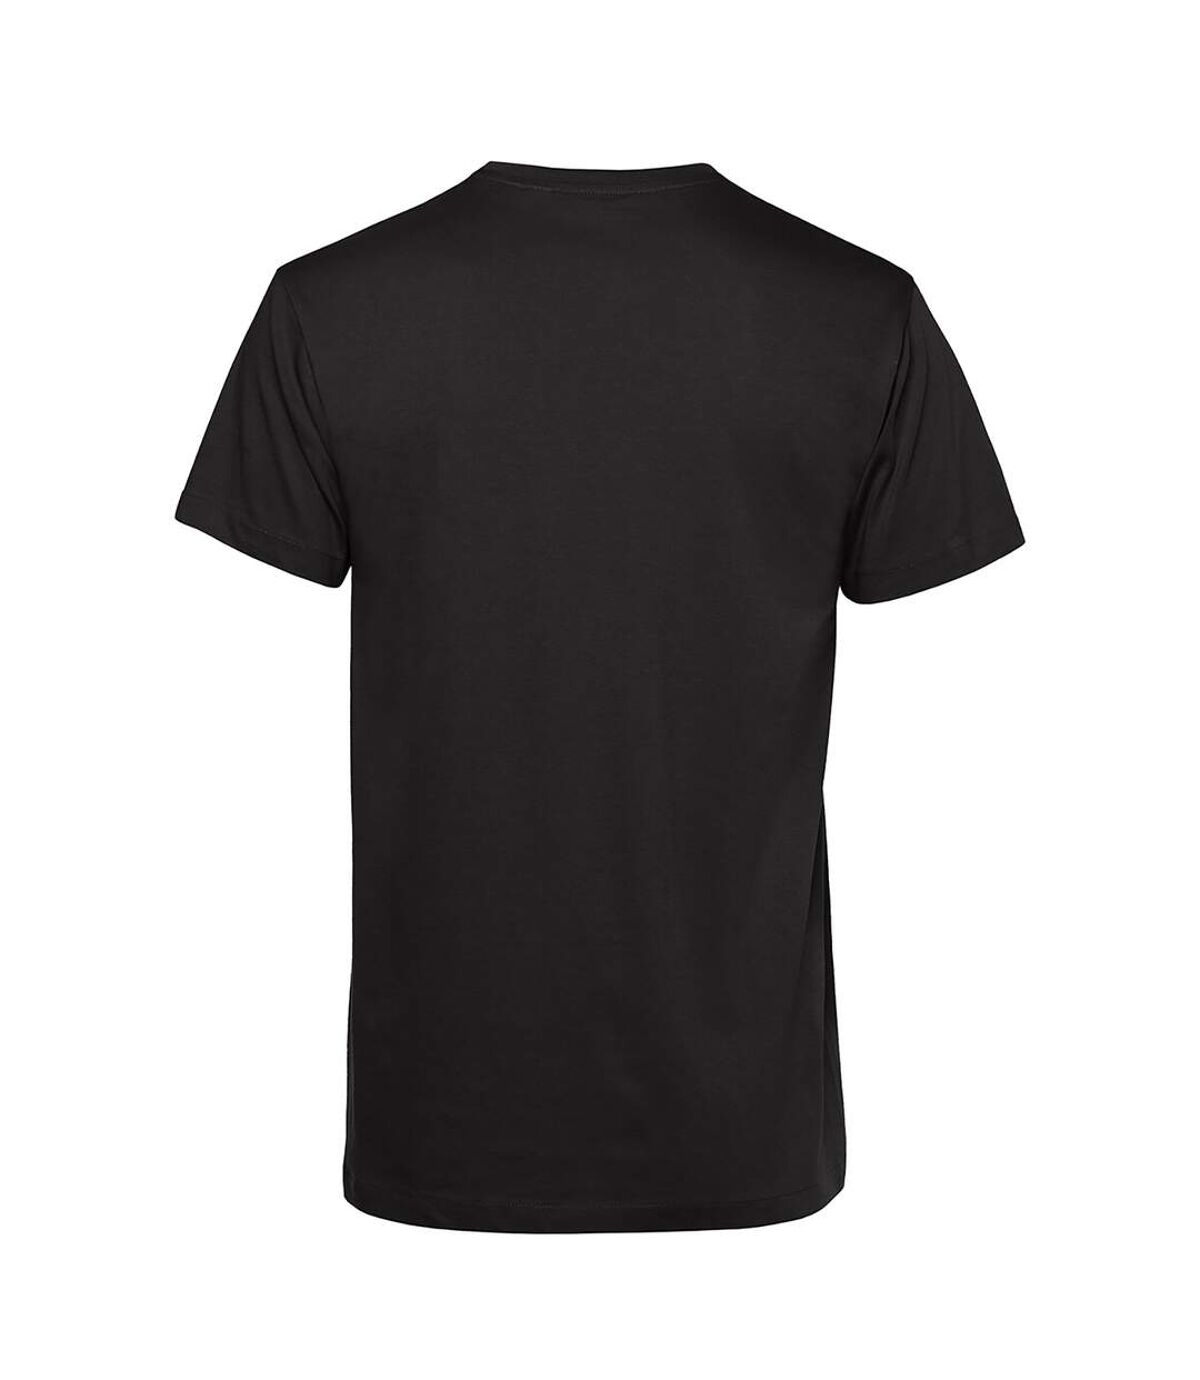 B&C - T-shirt E150 - Homme (Noir) - UTBC4658